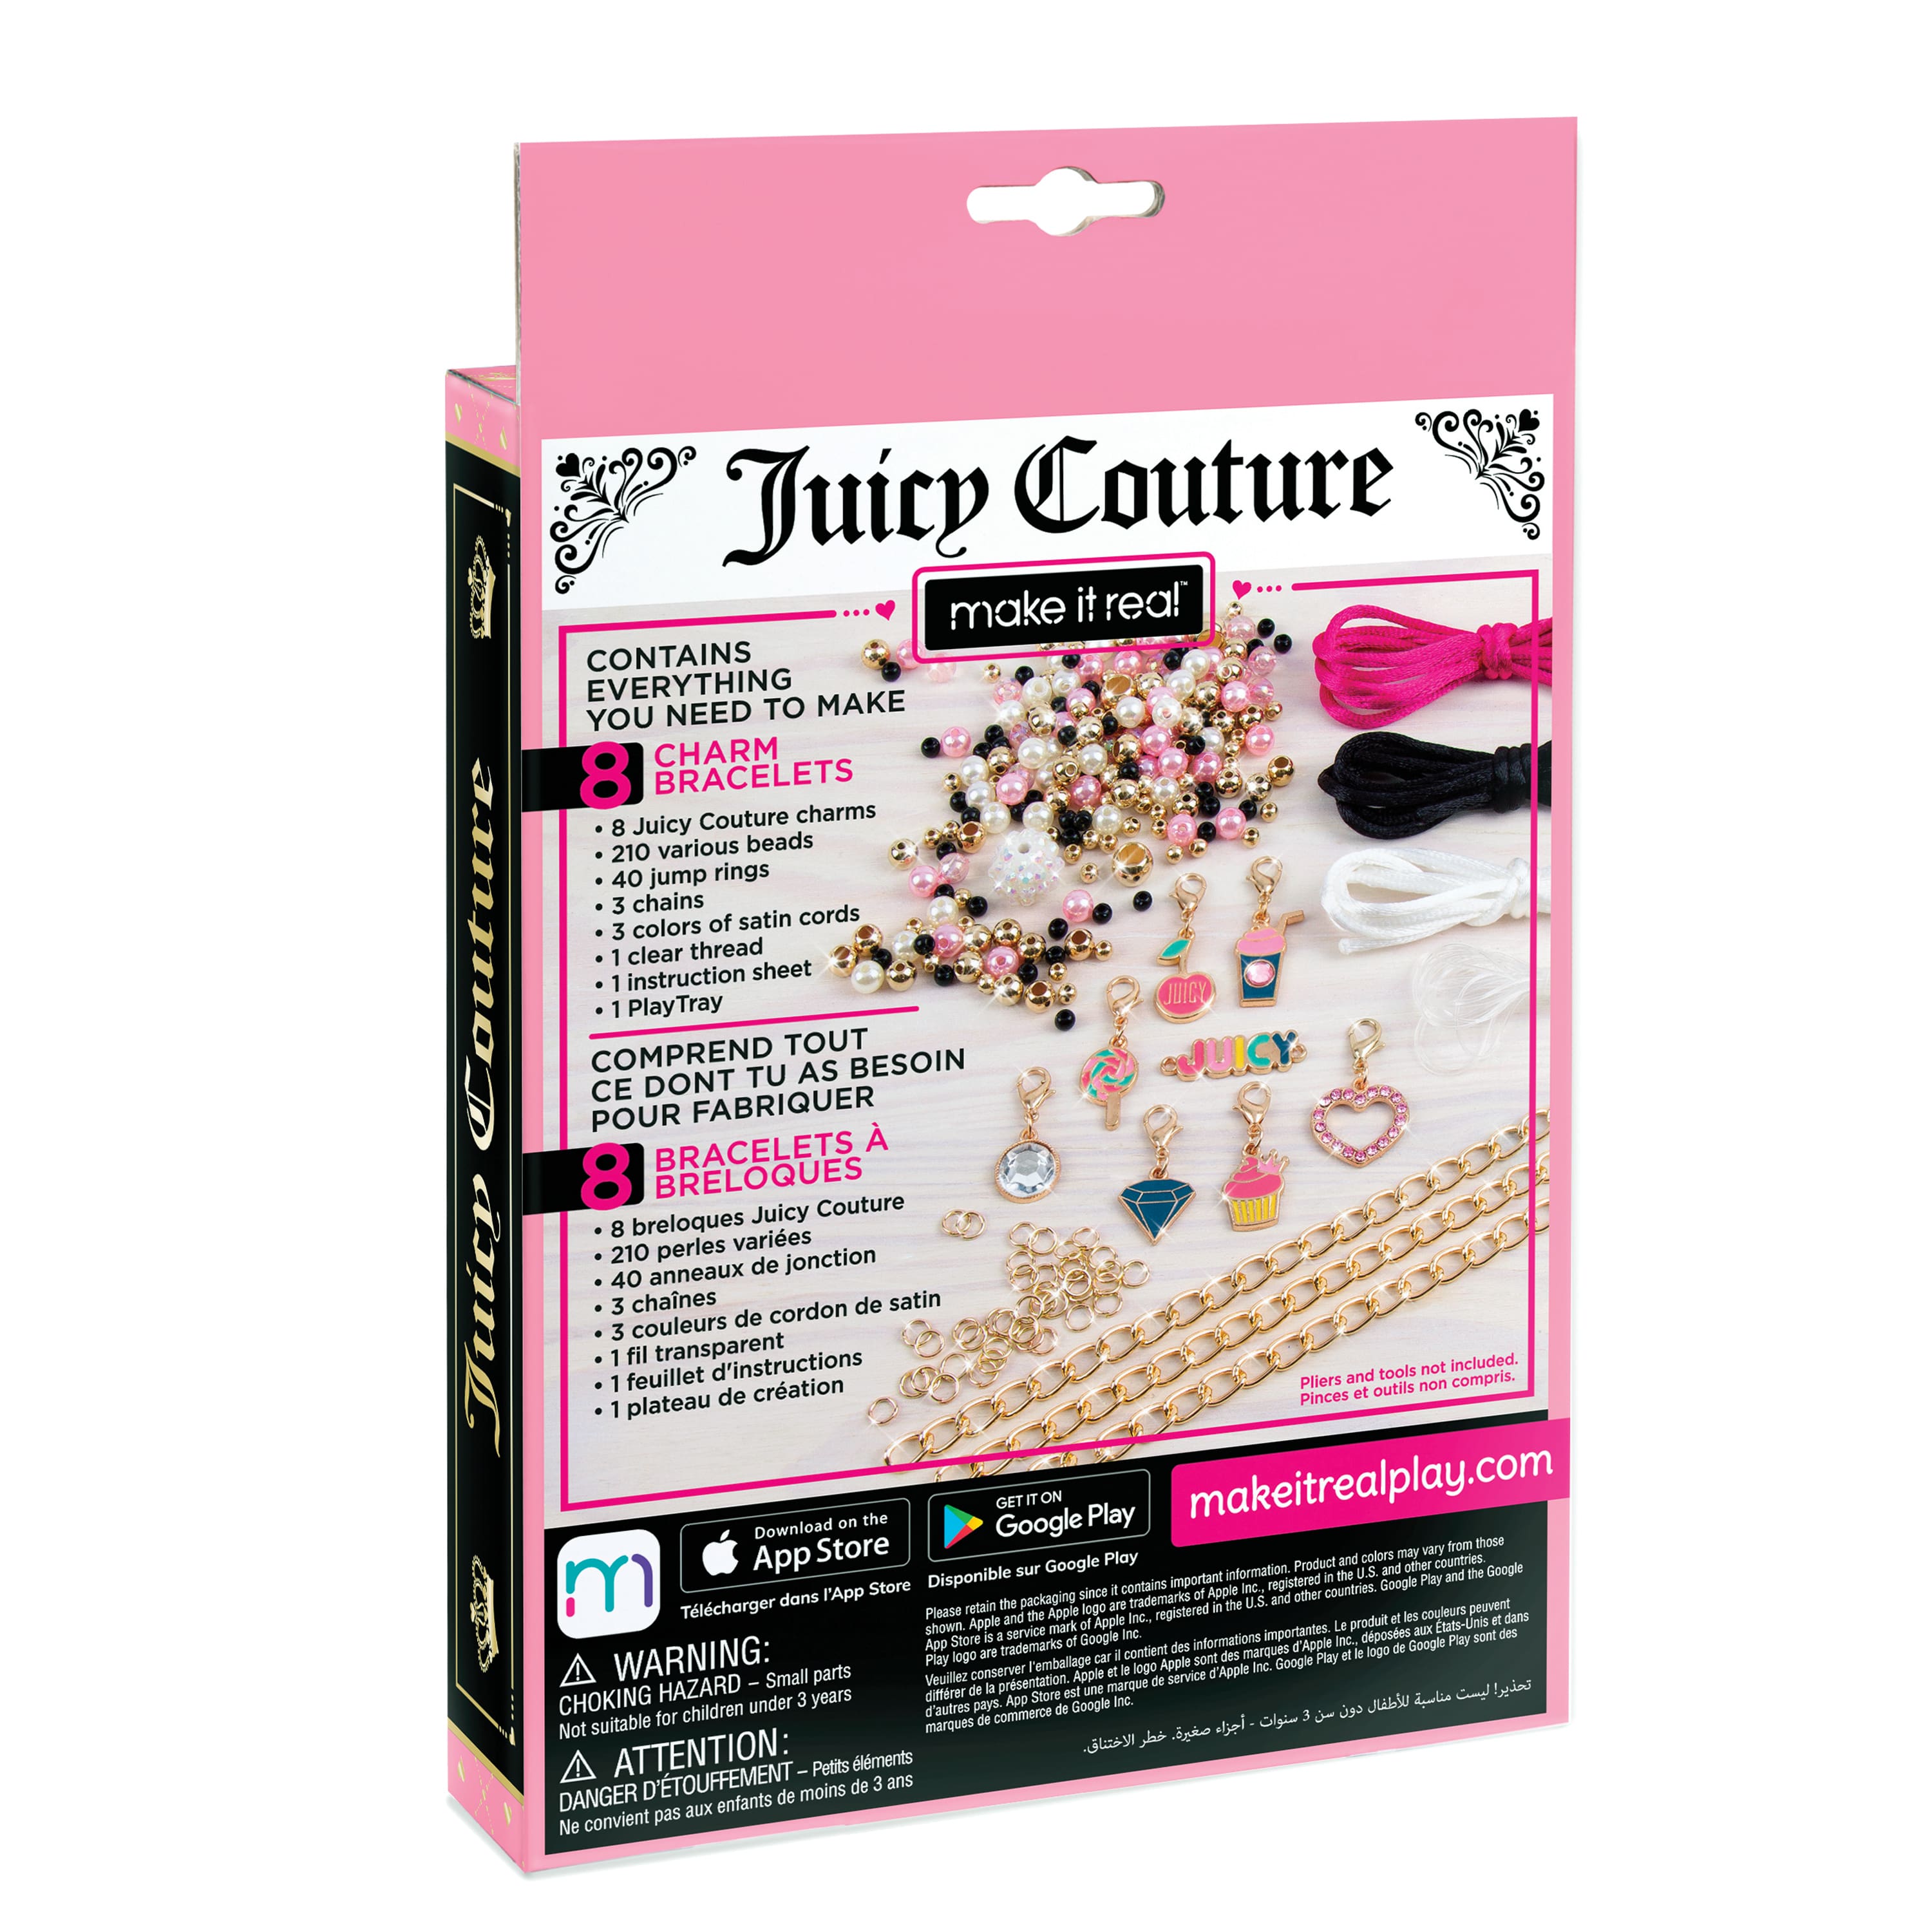 Juicy Couture Bracelet Kit! #juicycouture #juicy #juicybracelet #micha